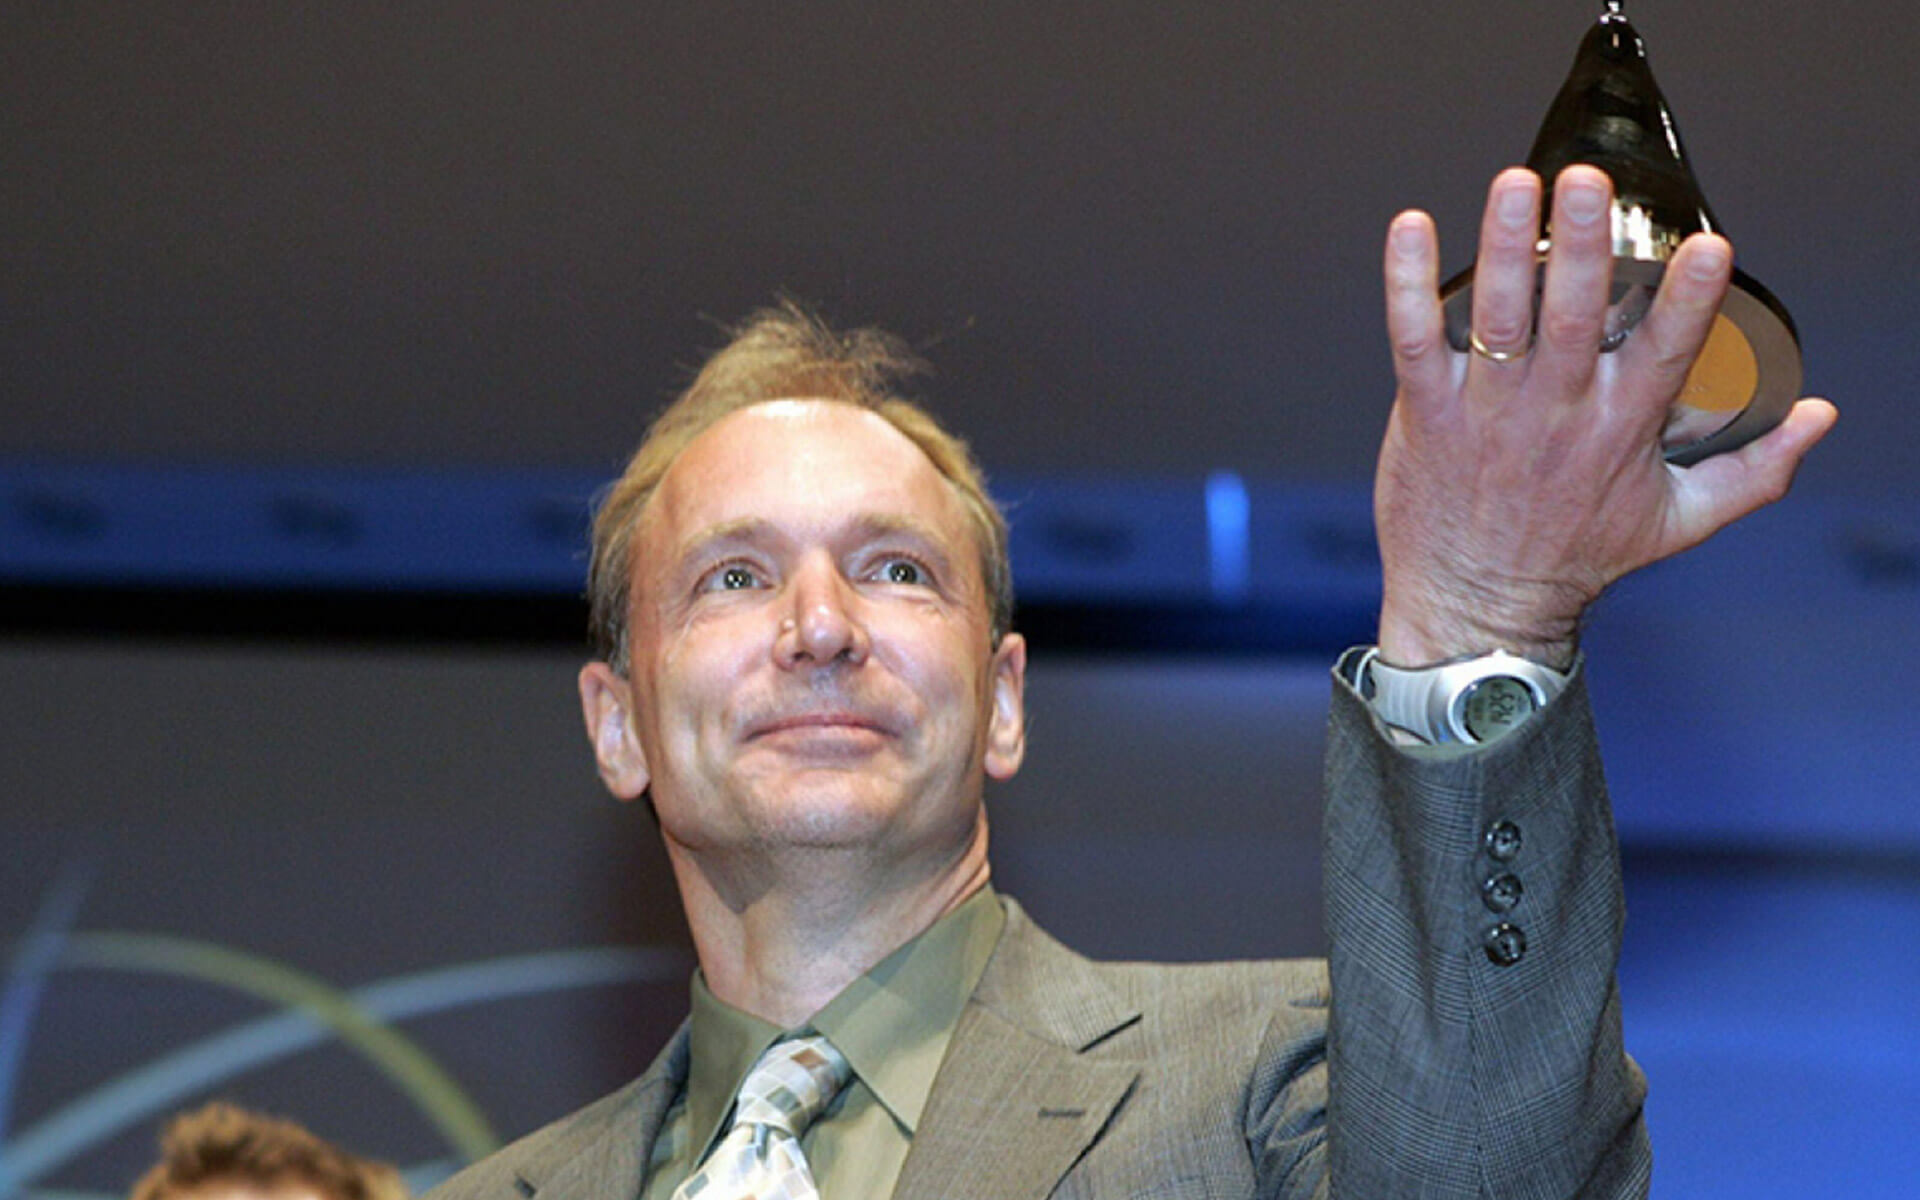 Special Award - Tim Berners-Lee